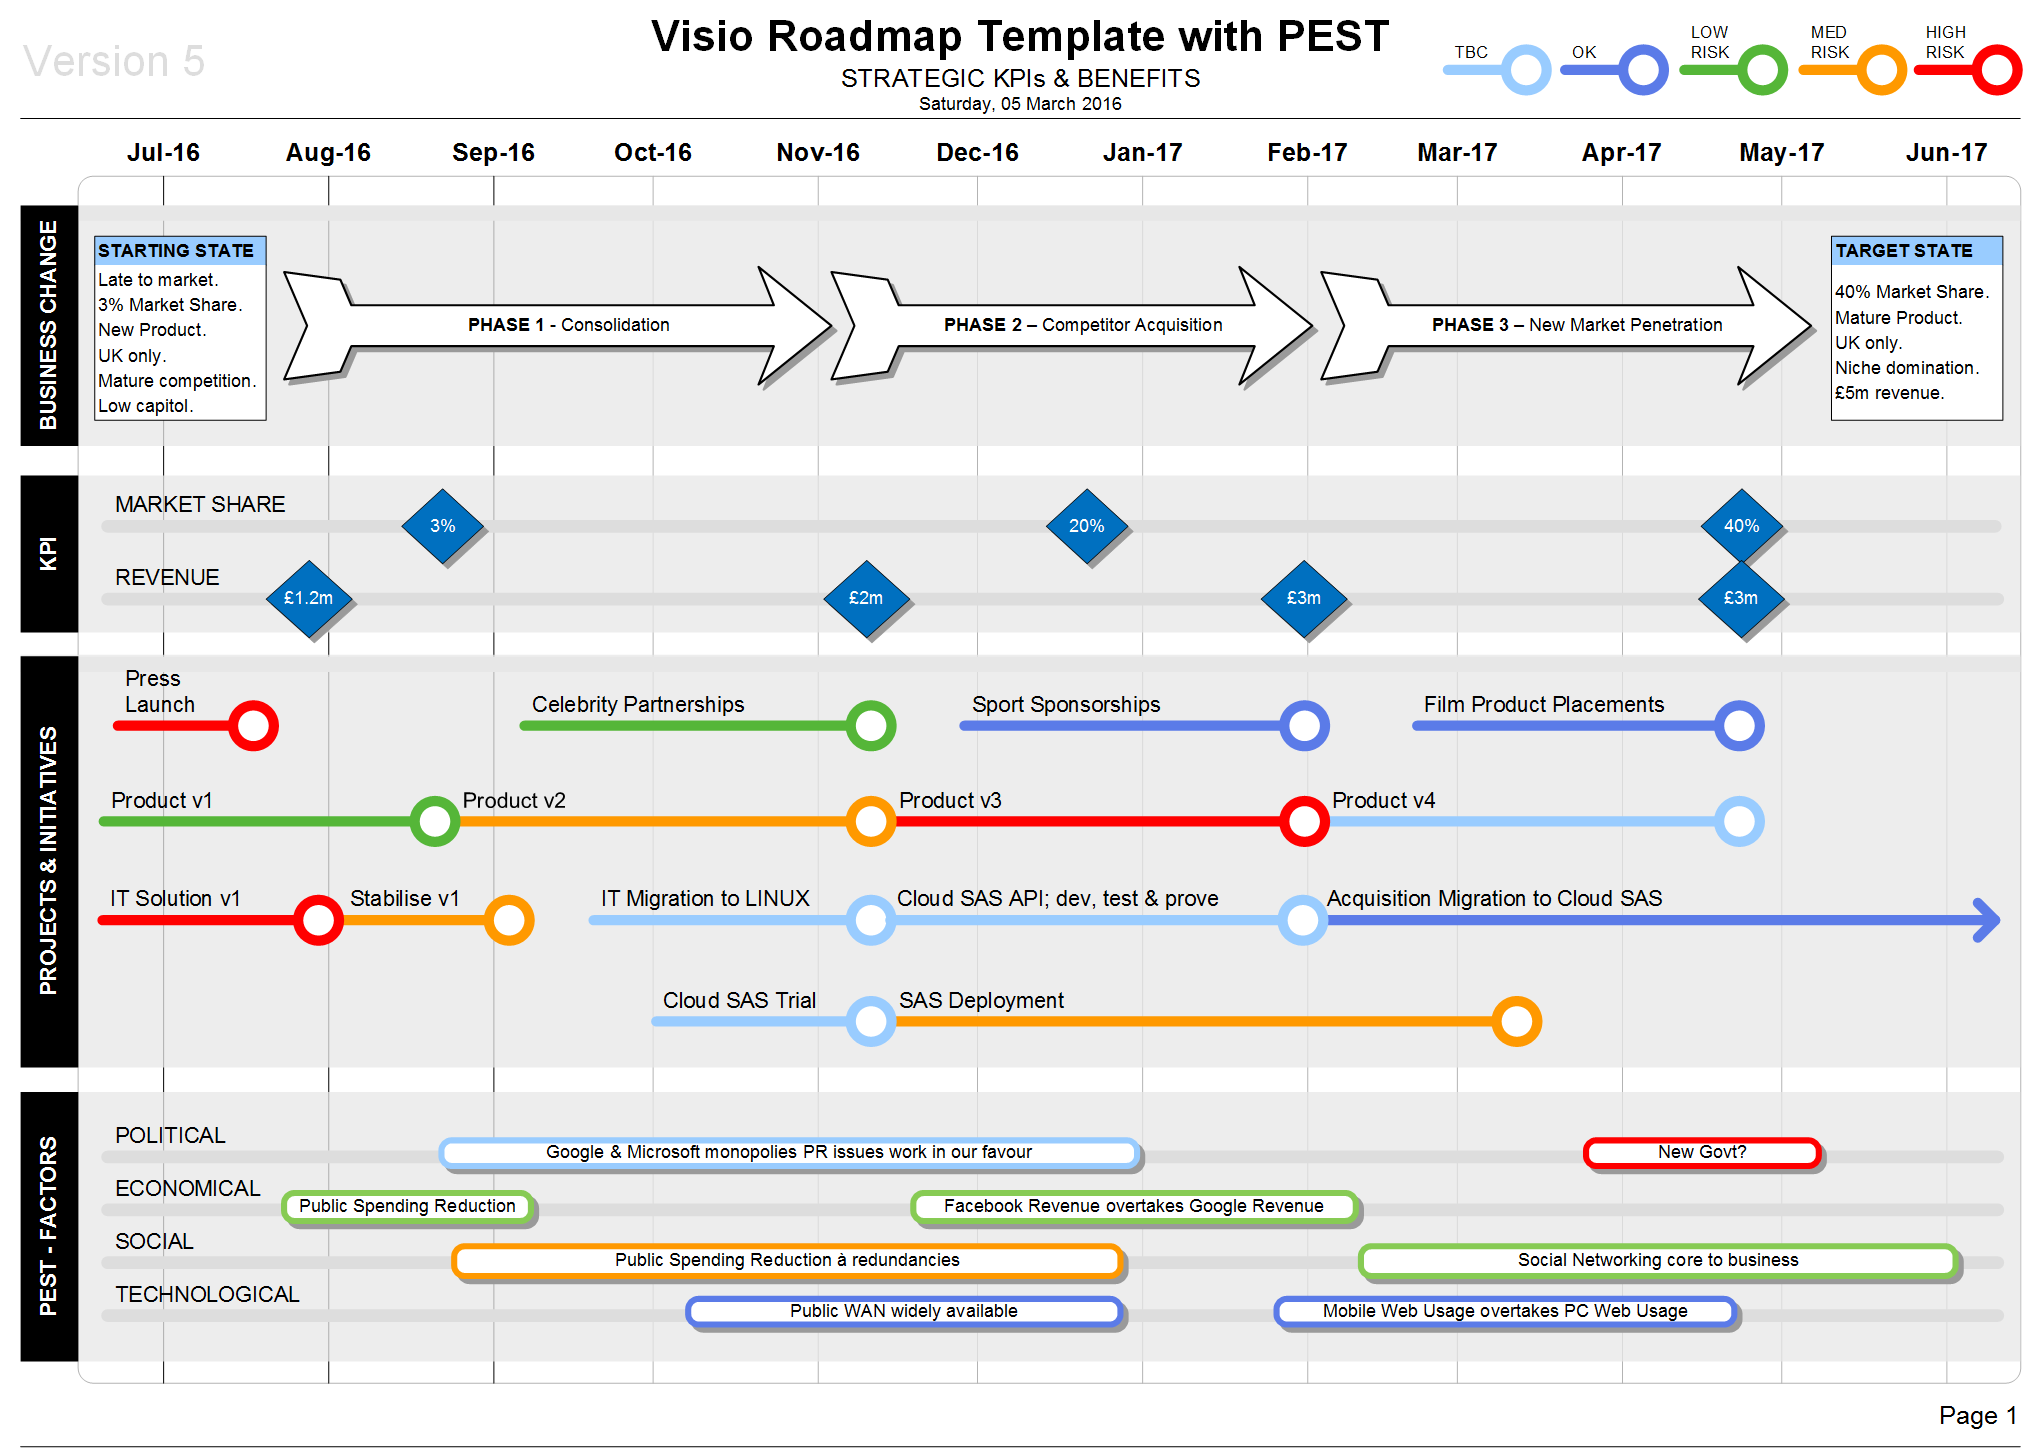 Visio Roadmap PEST Template - Strategic KPIs & Benefits